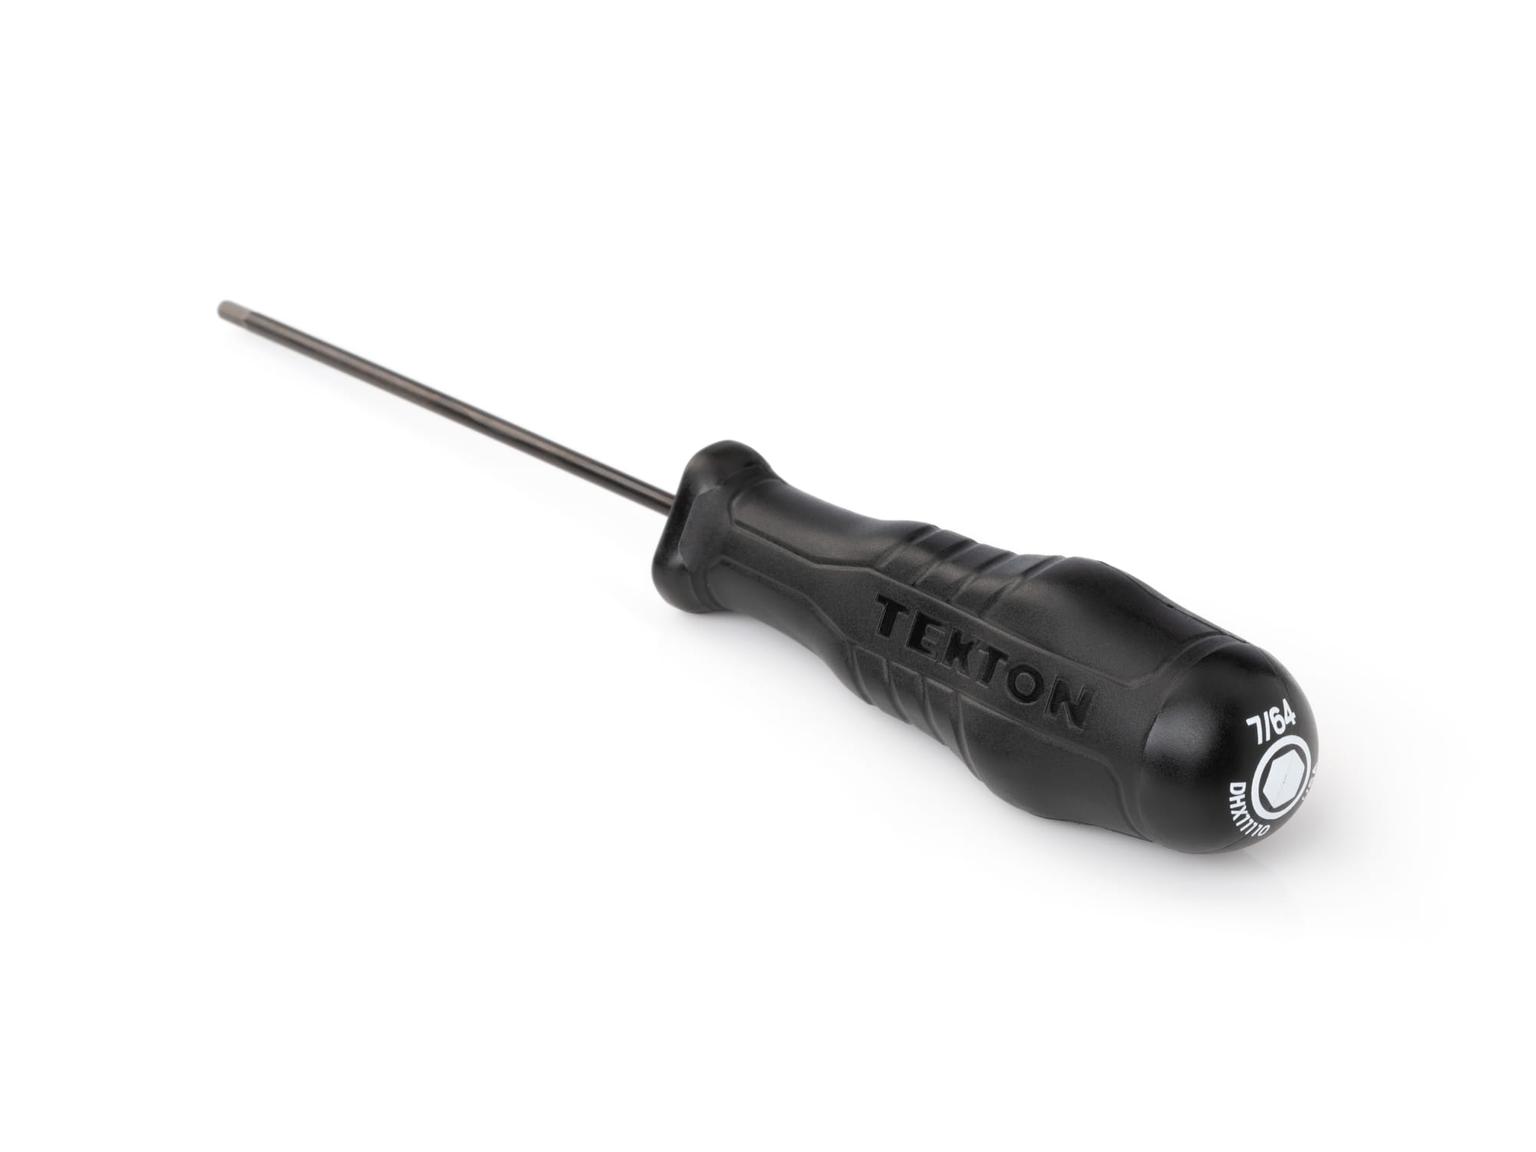 TEKTON DHX11110-T 7/64 Inch Hex High-Torque Black Oxide Blade Screwdriver